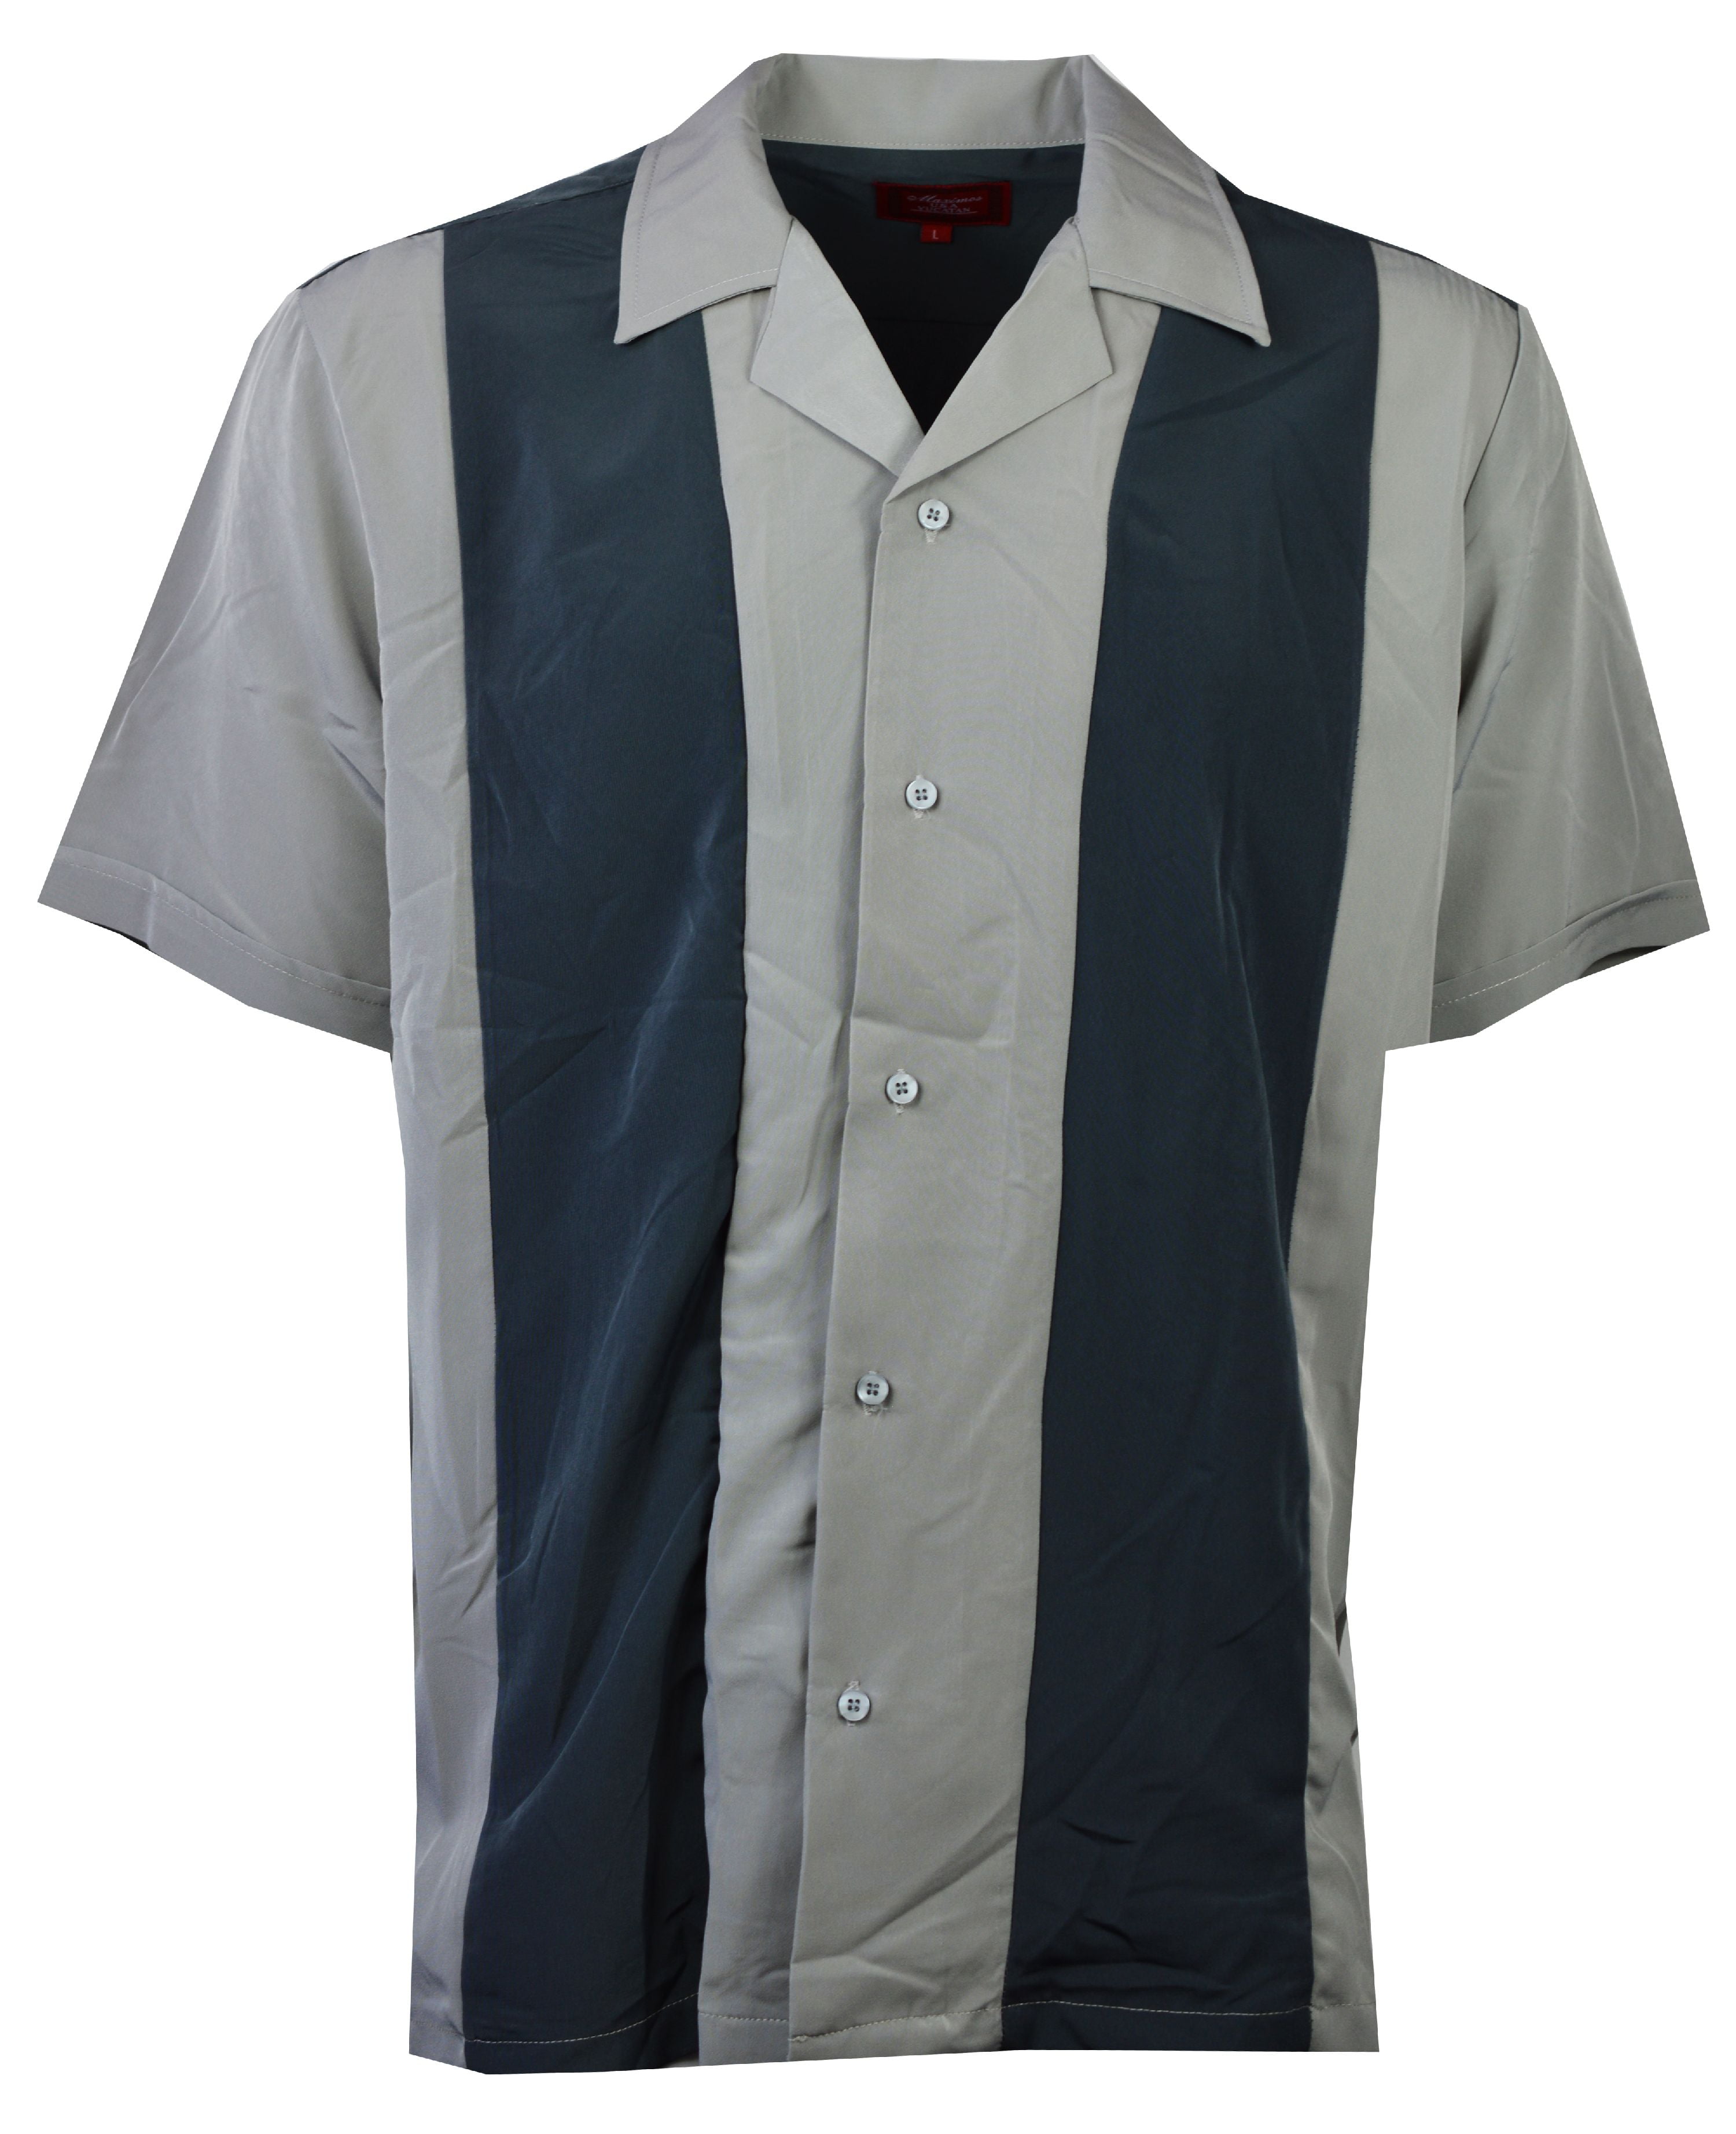 Roto Grip Men's Capture T-Shirt Bowling Shirt Sleeve Stripe Jersey Red White 